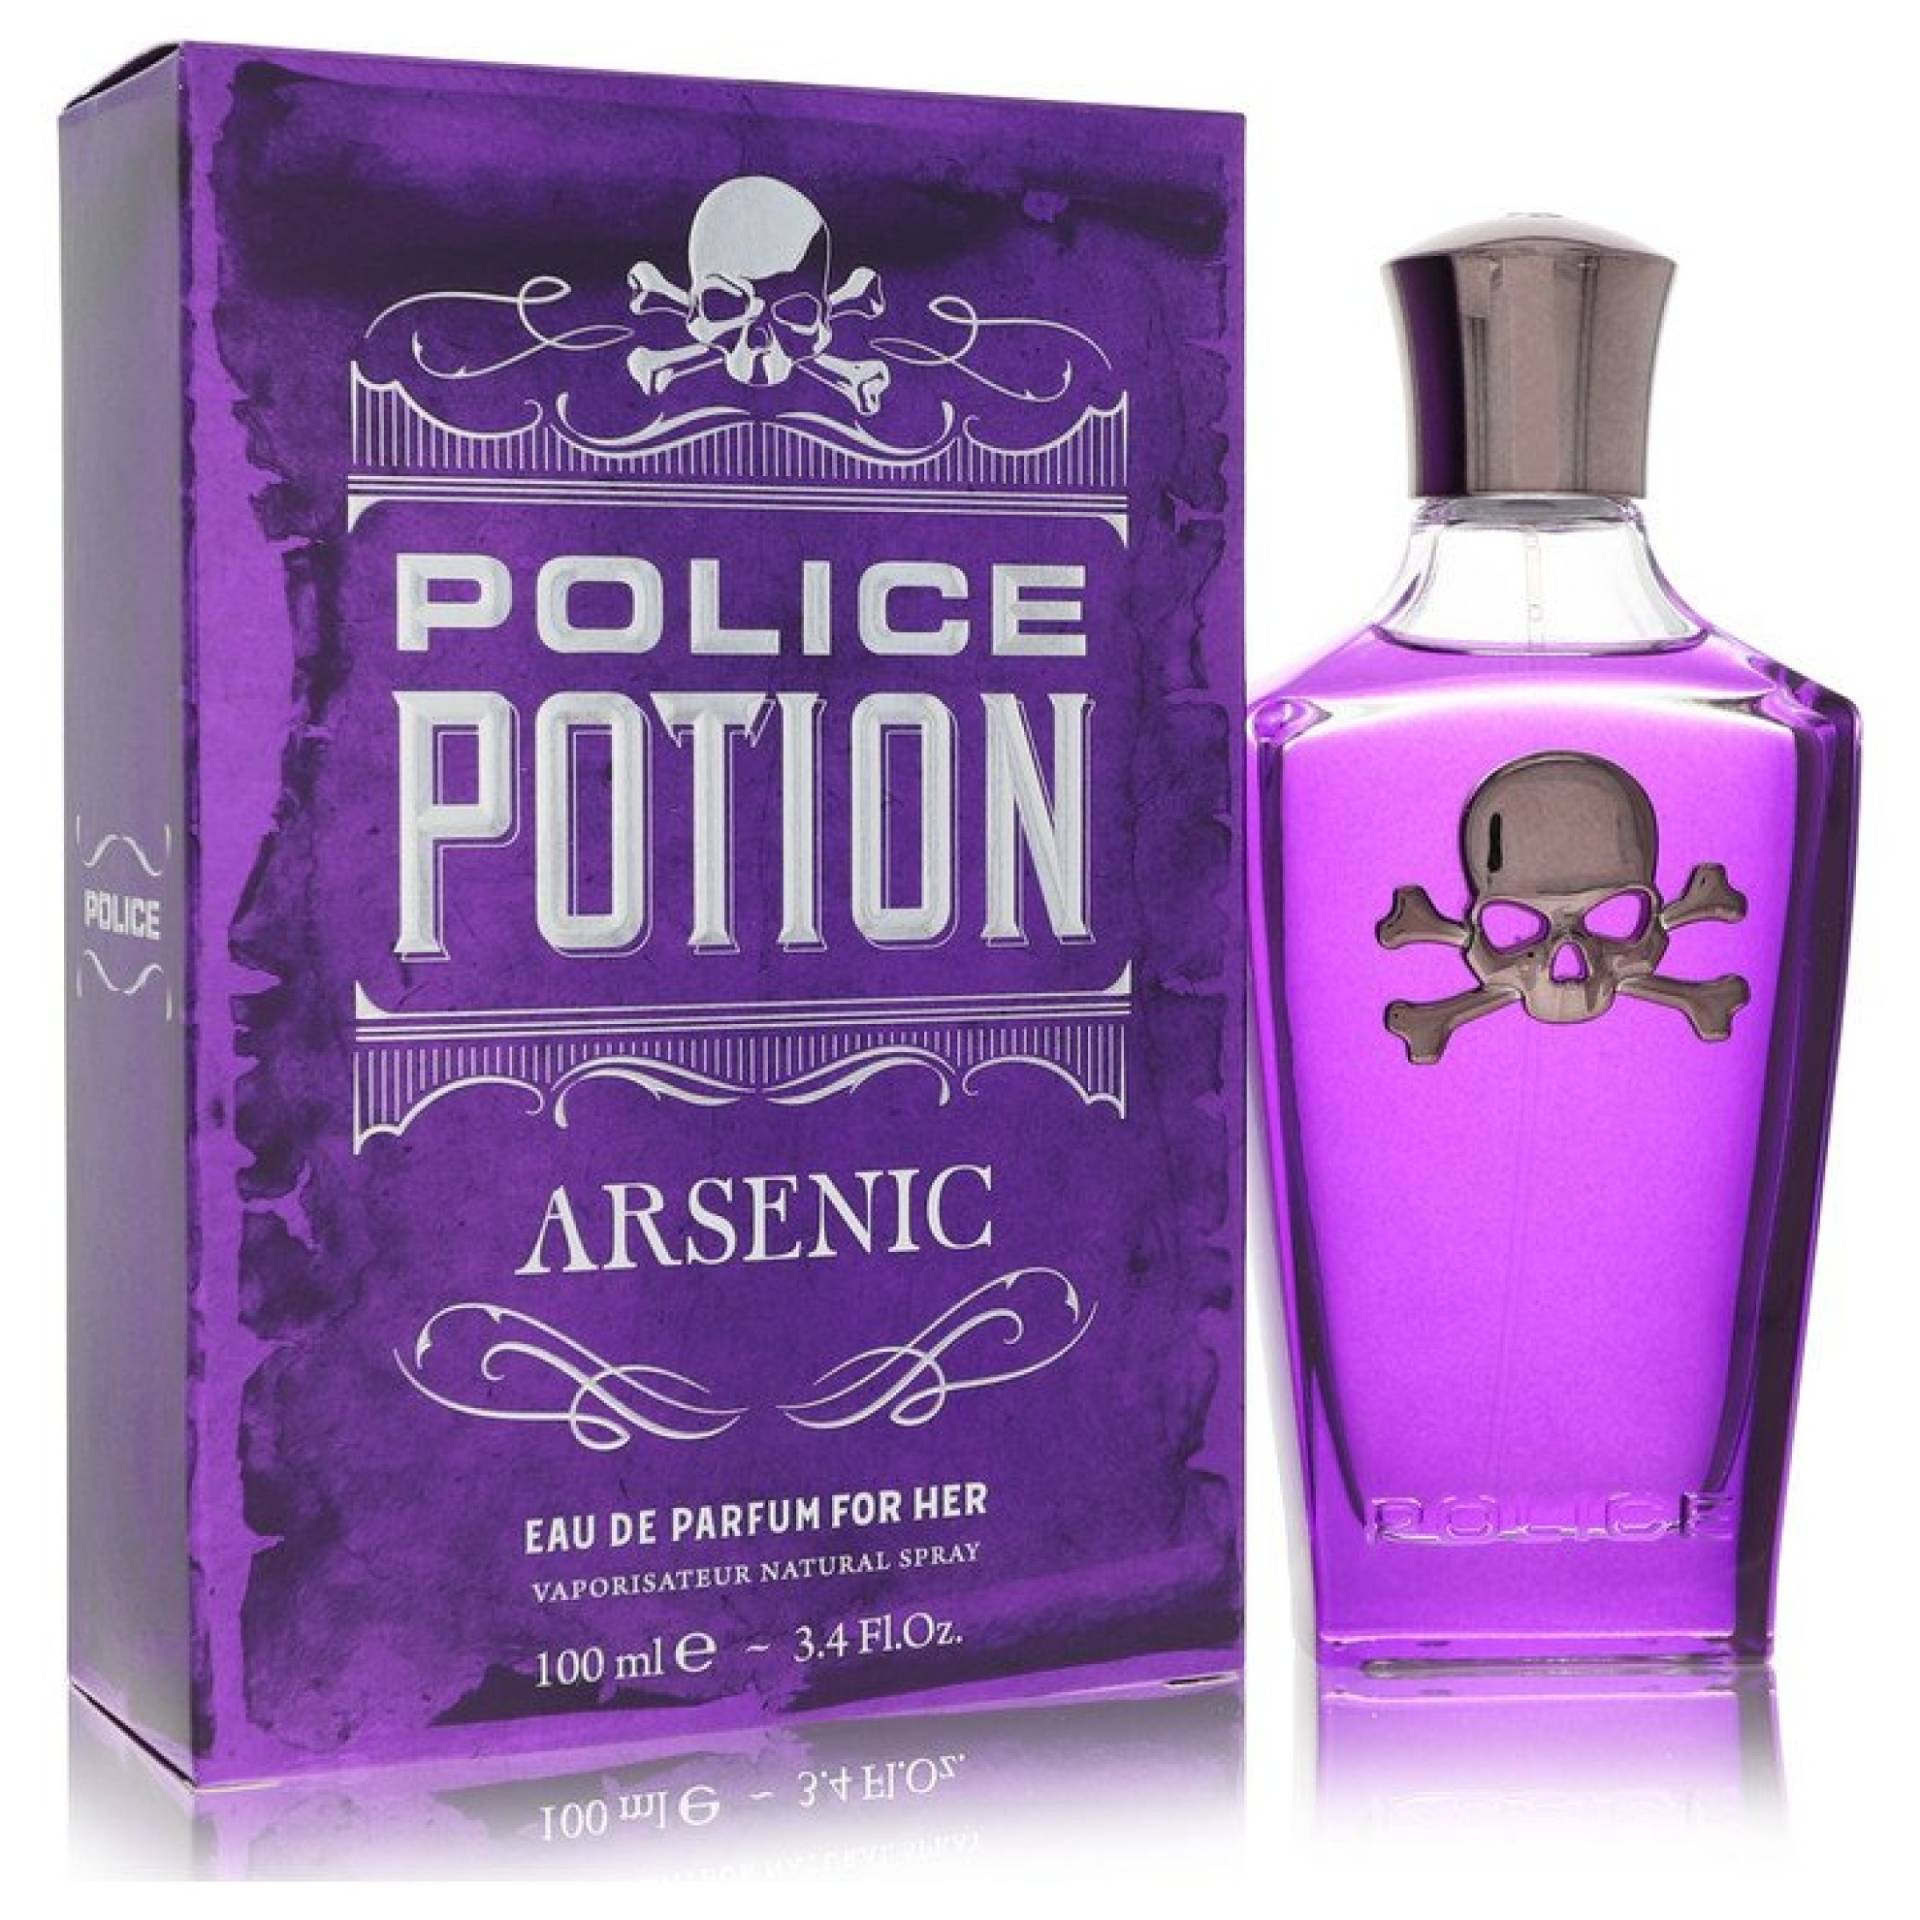 Police Colognes Police Potion Arsenic Eau De Parfum Spray 101 ml von Police Colognes